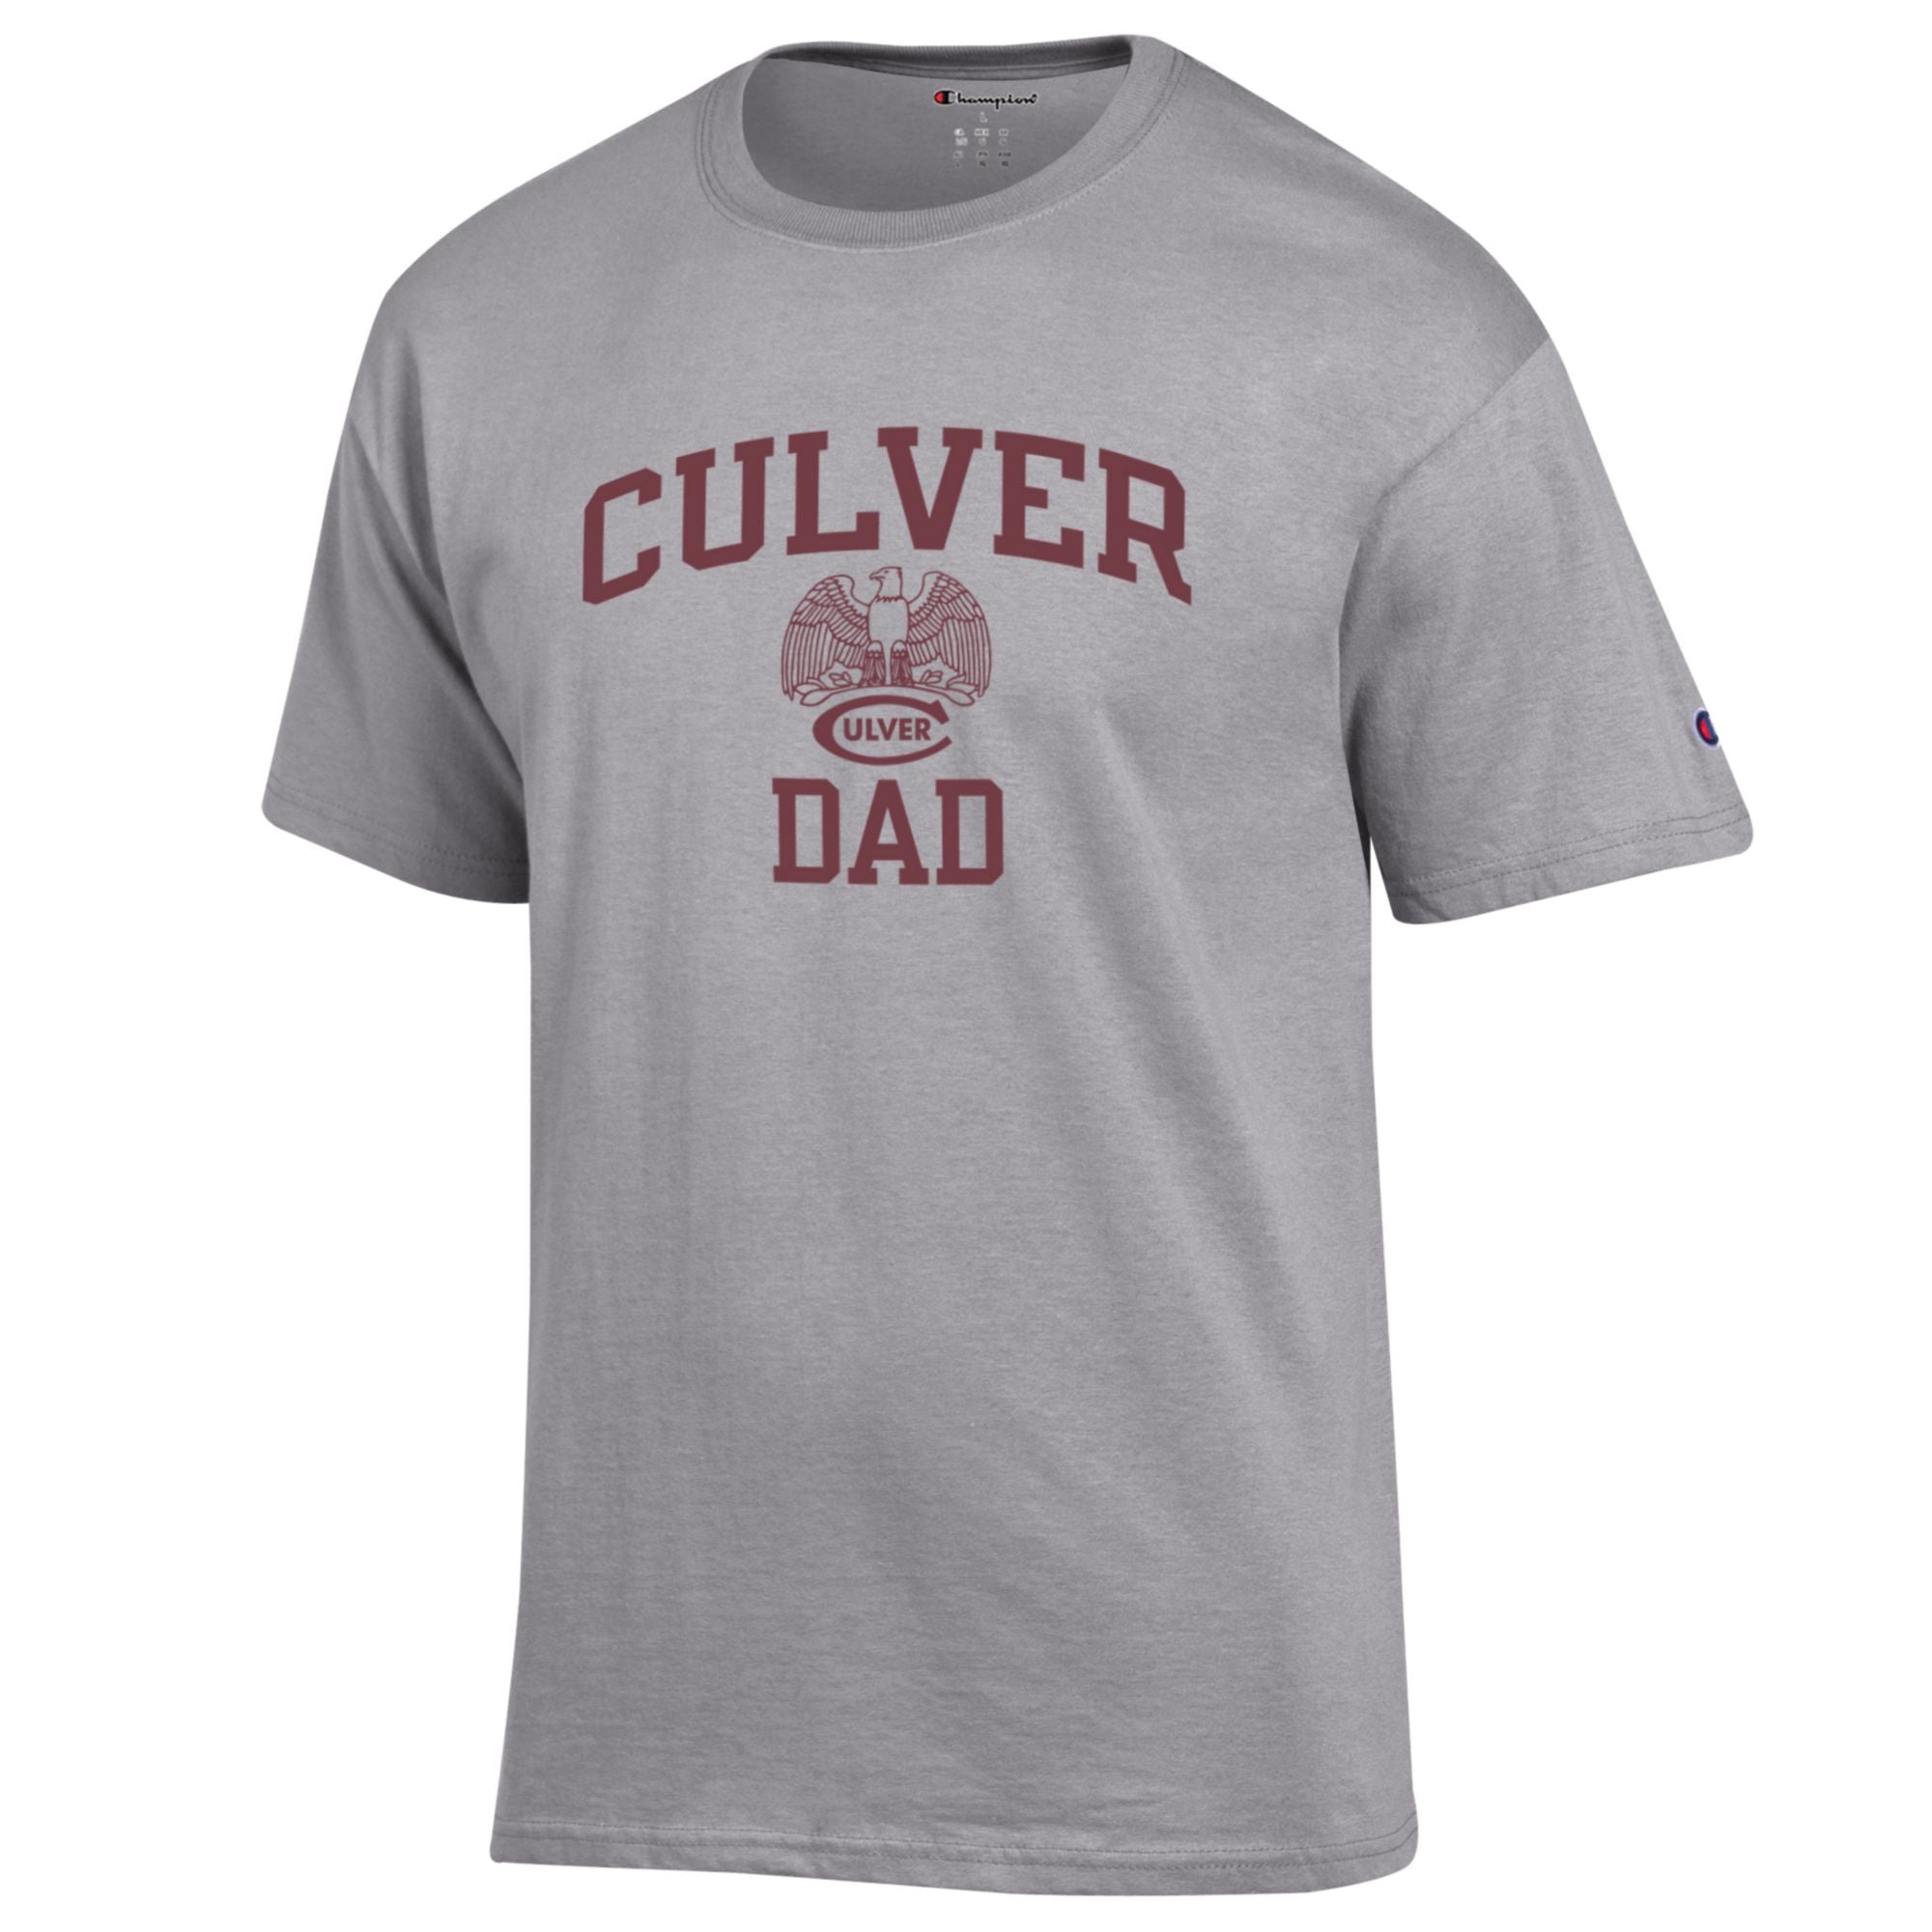 Champion Jersey Culver Dad Tee Tee - Grey